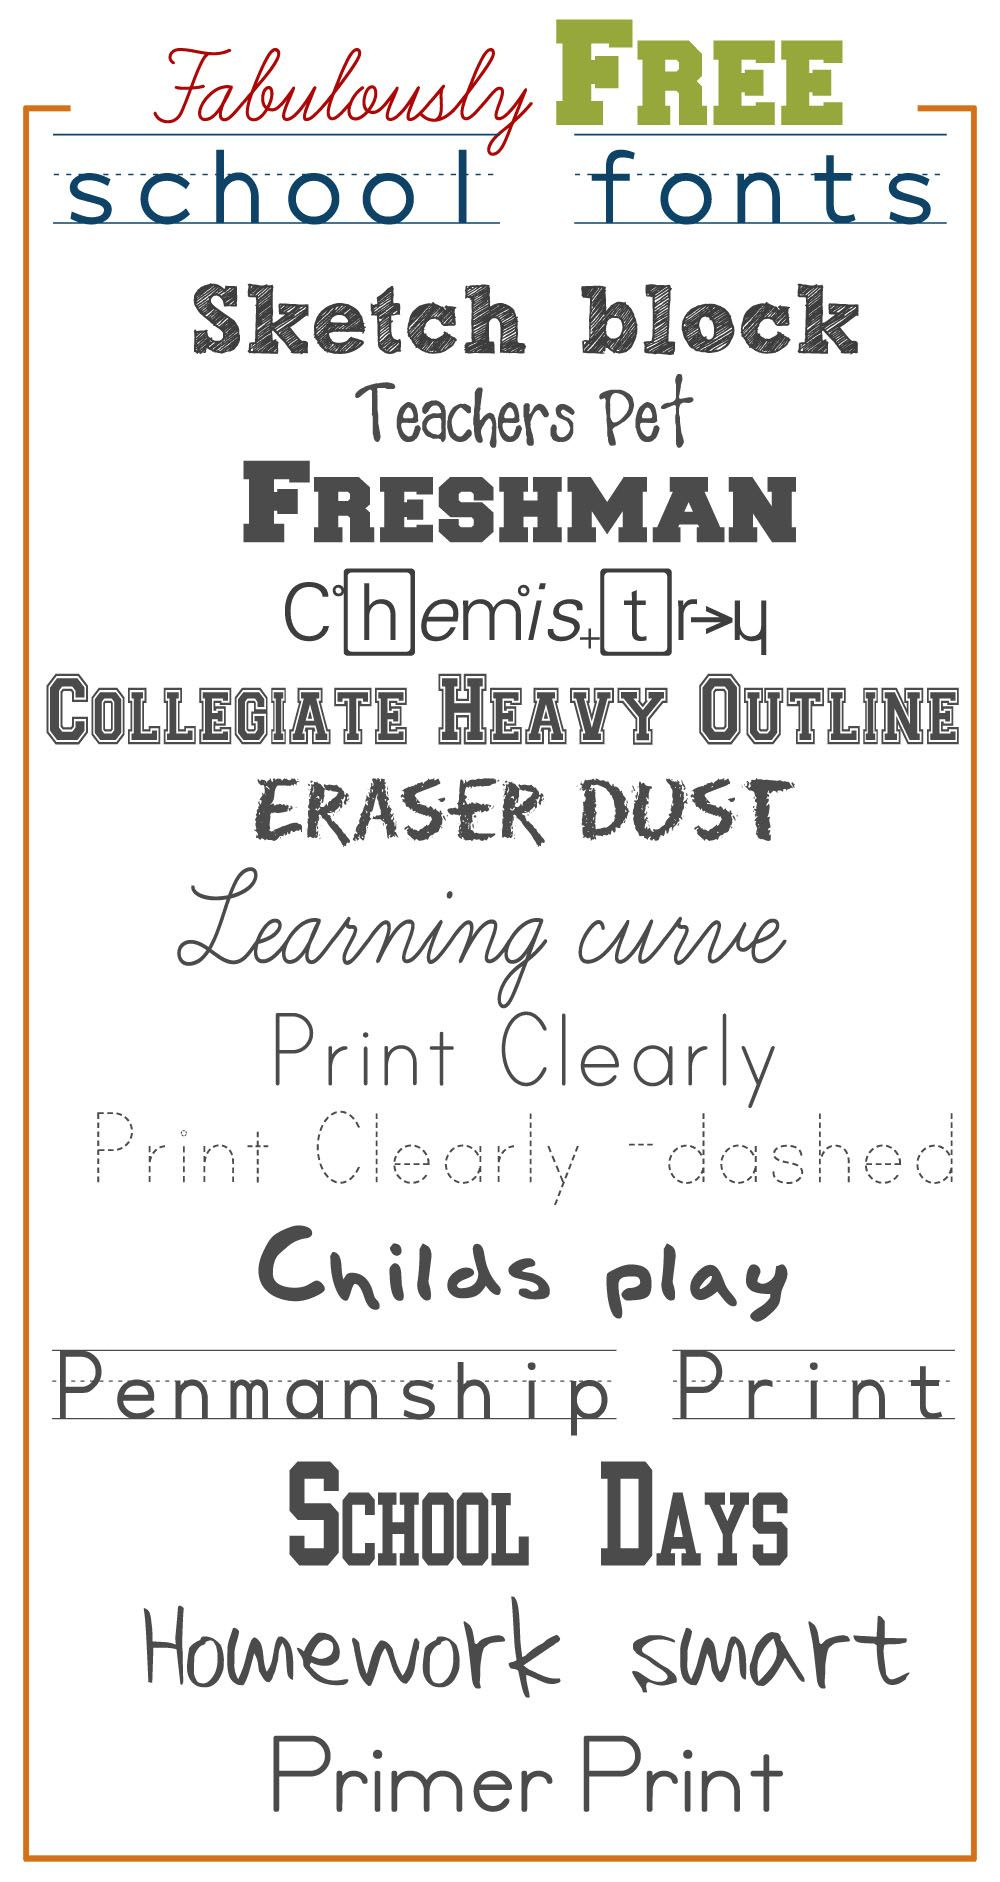 Fabulously Free School Fonts | Free School Fonts, School Fonts throughout Free Printable Fonts